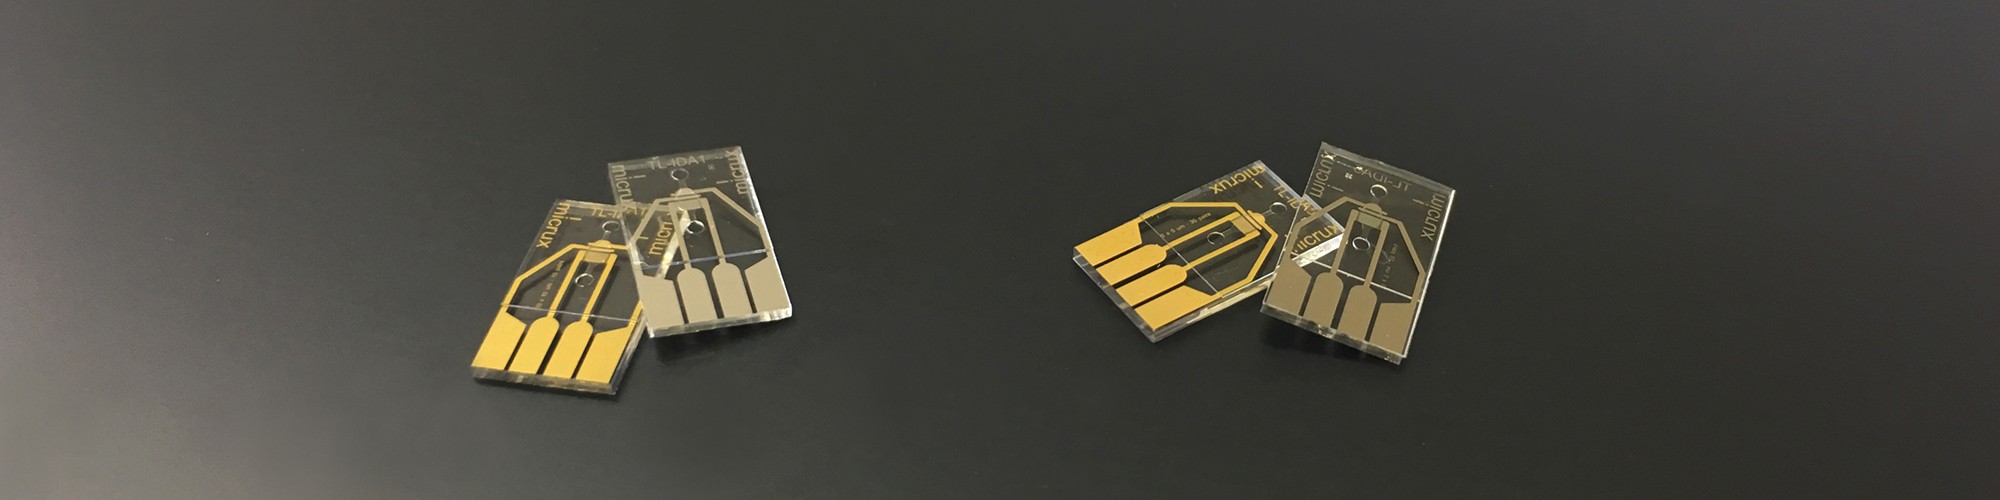 Thin-layer InterDigitated Array Sensors